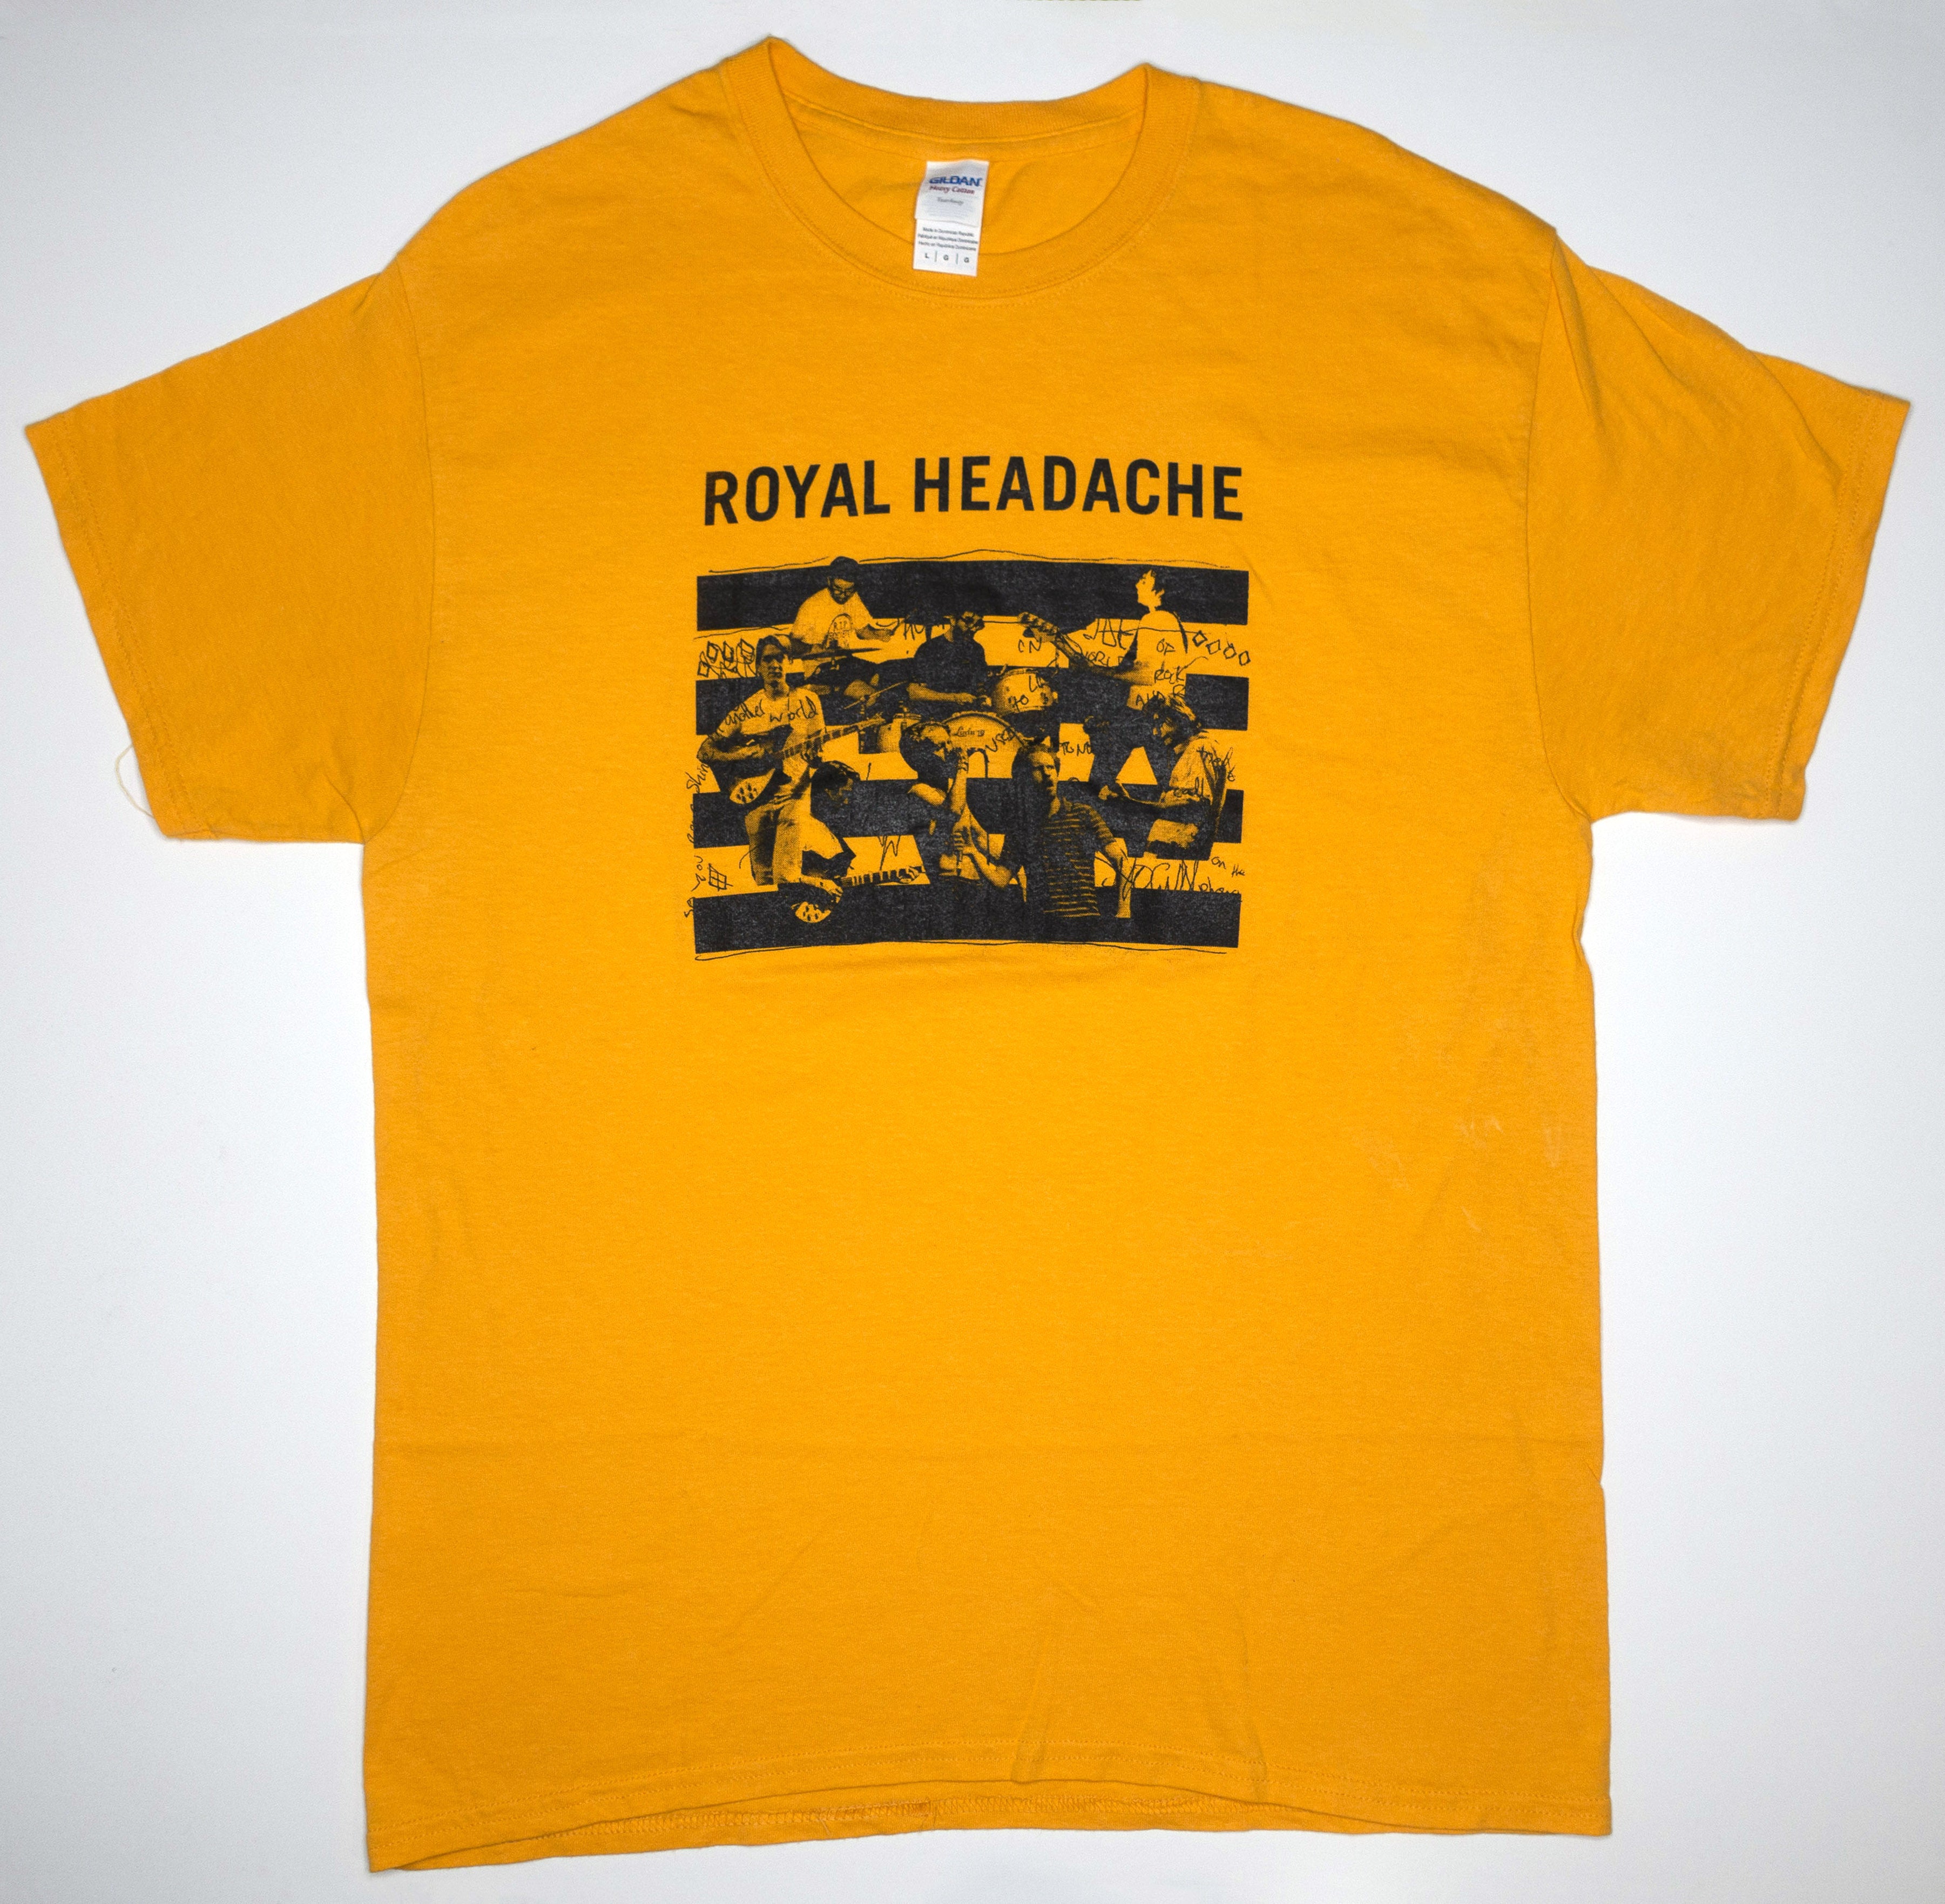 Royal Headache - 1/C Band Photos Tour Shirt Size Large